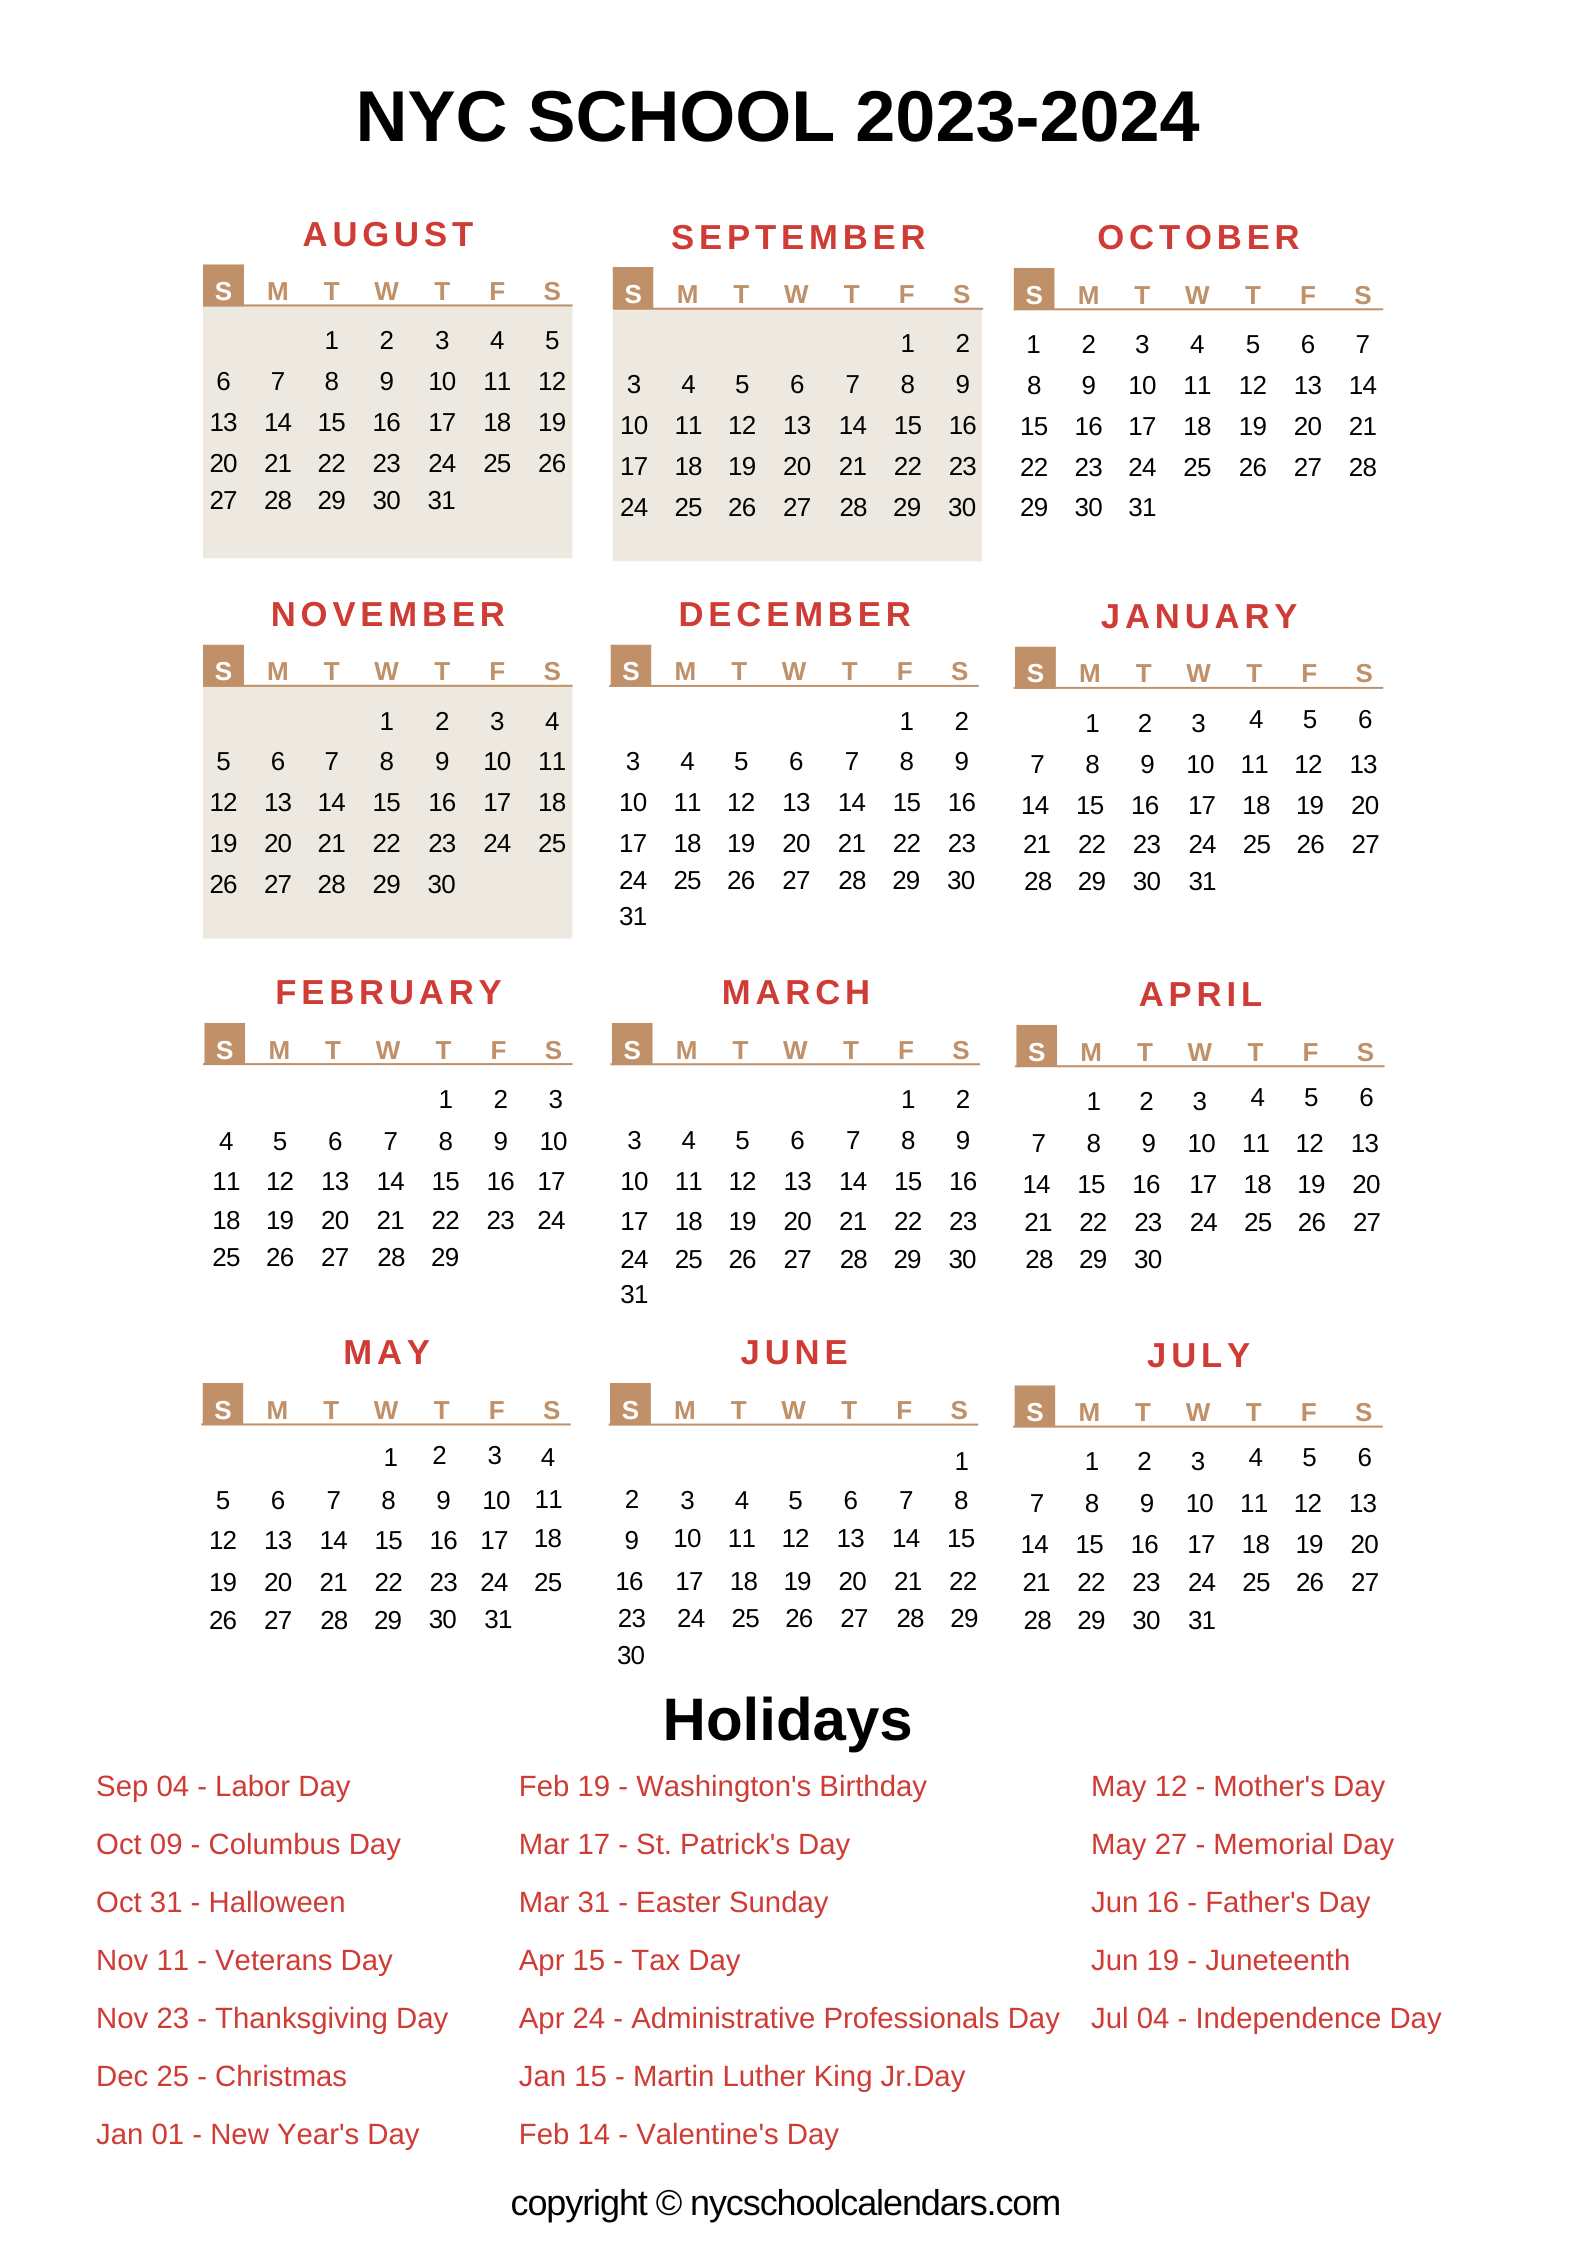 NYC School Holidays 2023 Calendar